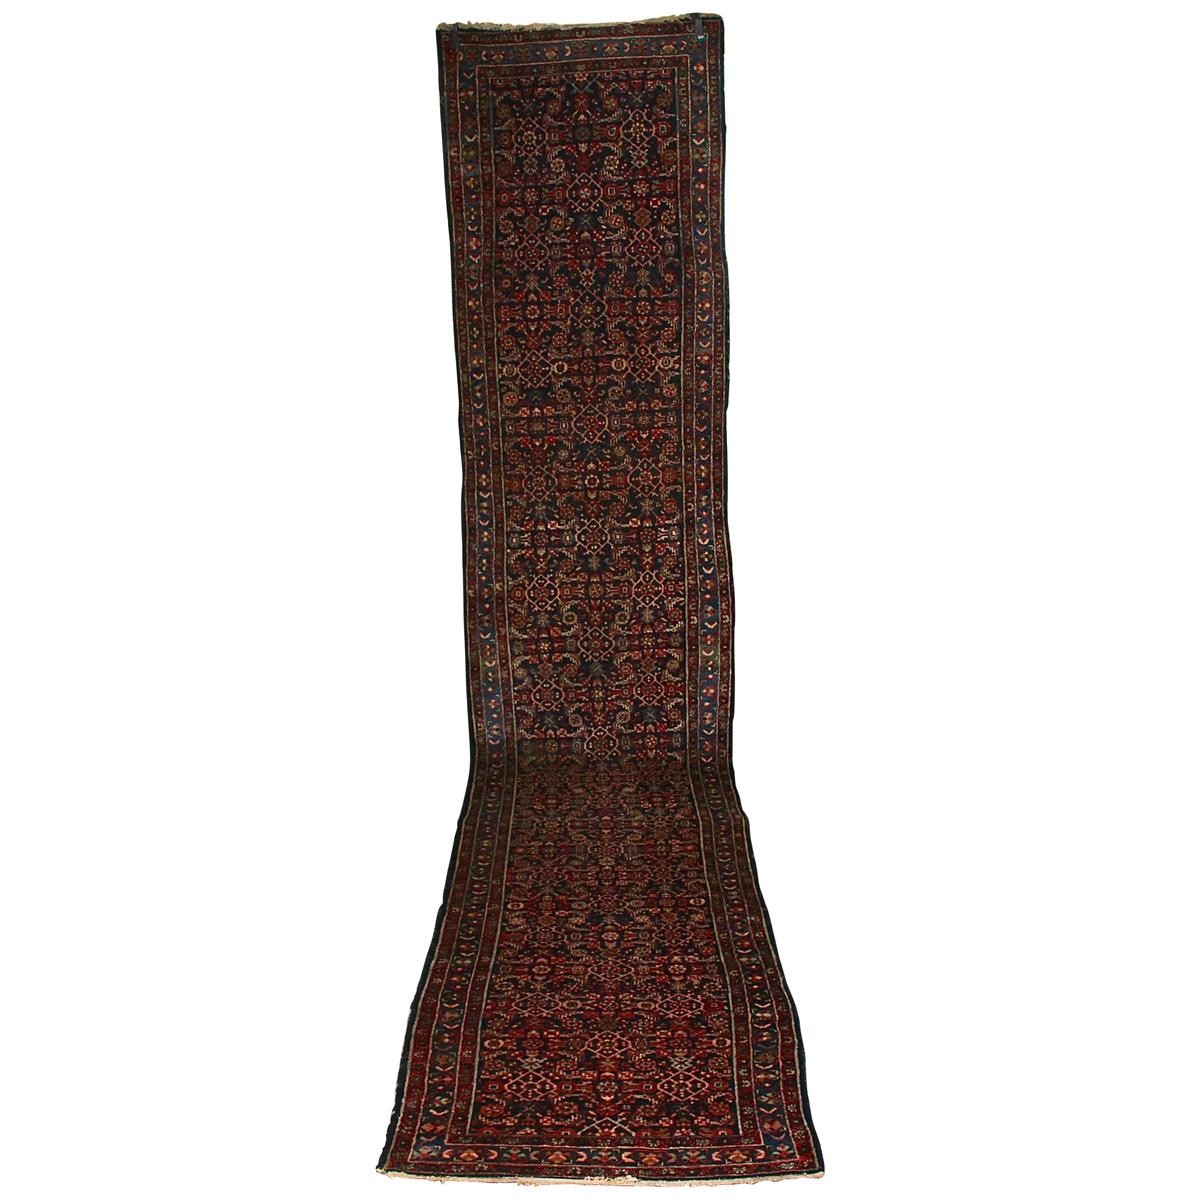 Antique Oriental Rug, Long Runner, Orient Carpet